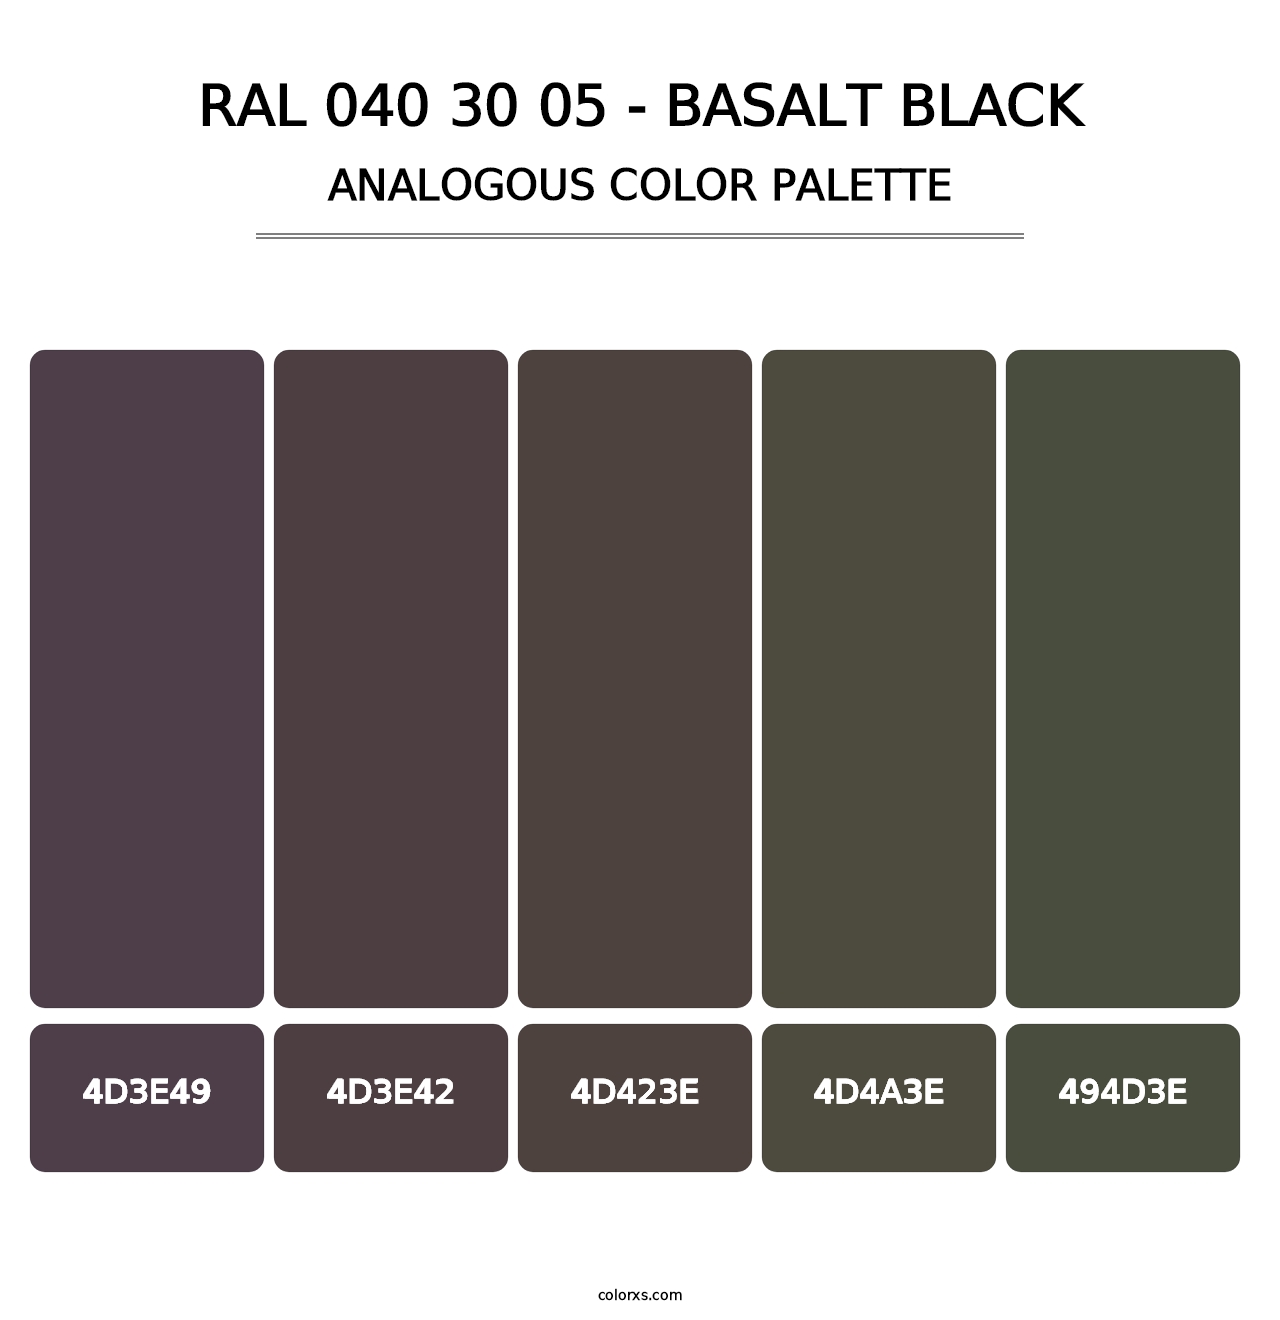 RAL 040 30 05 - Basalt Black - Analogous Color Palette